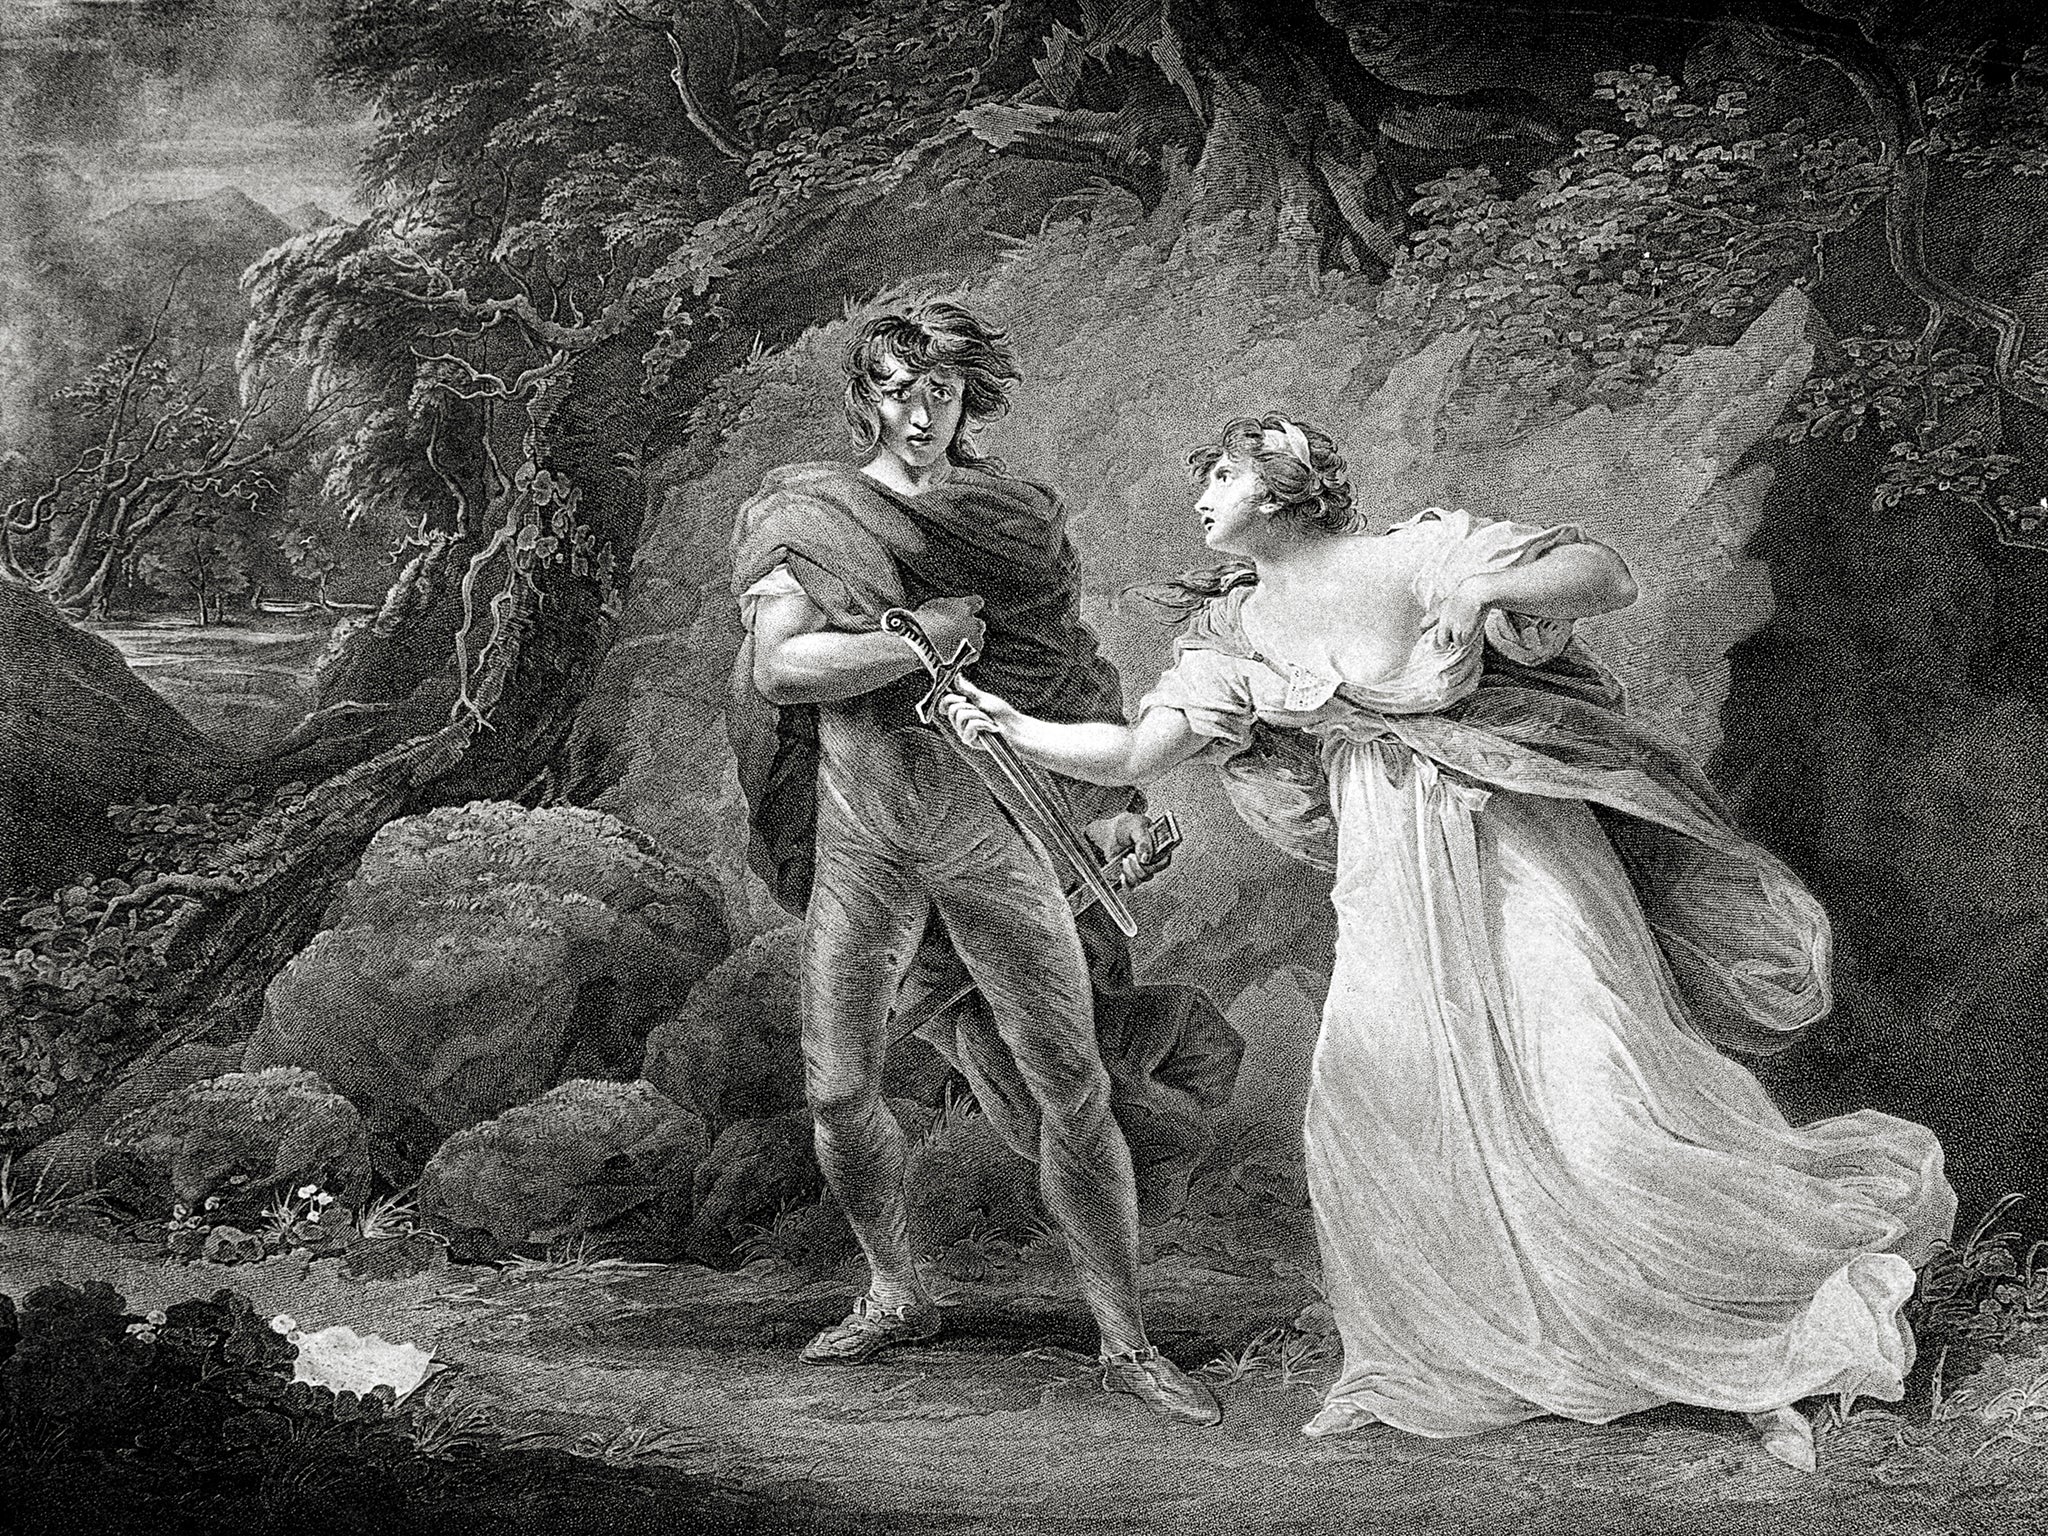 William Shakespeare 's play Cymbeline - Act III Scene IV: Pisanio and Imogen.